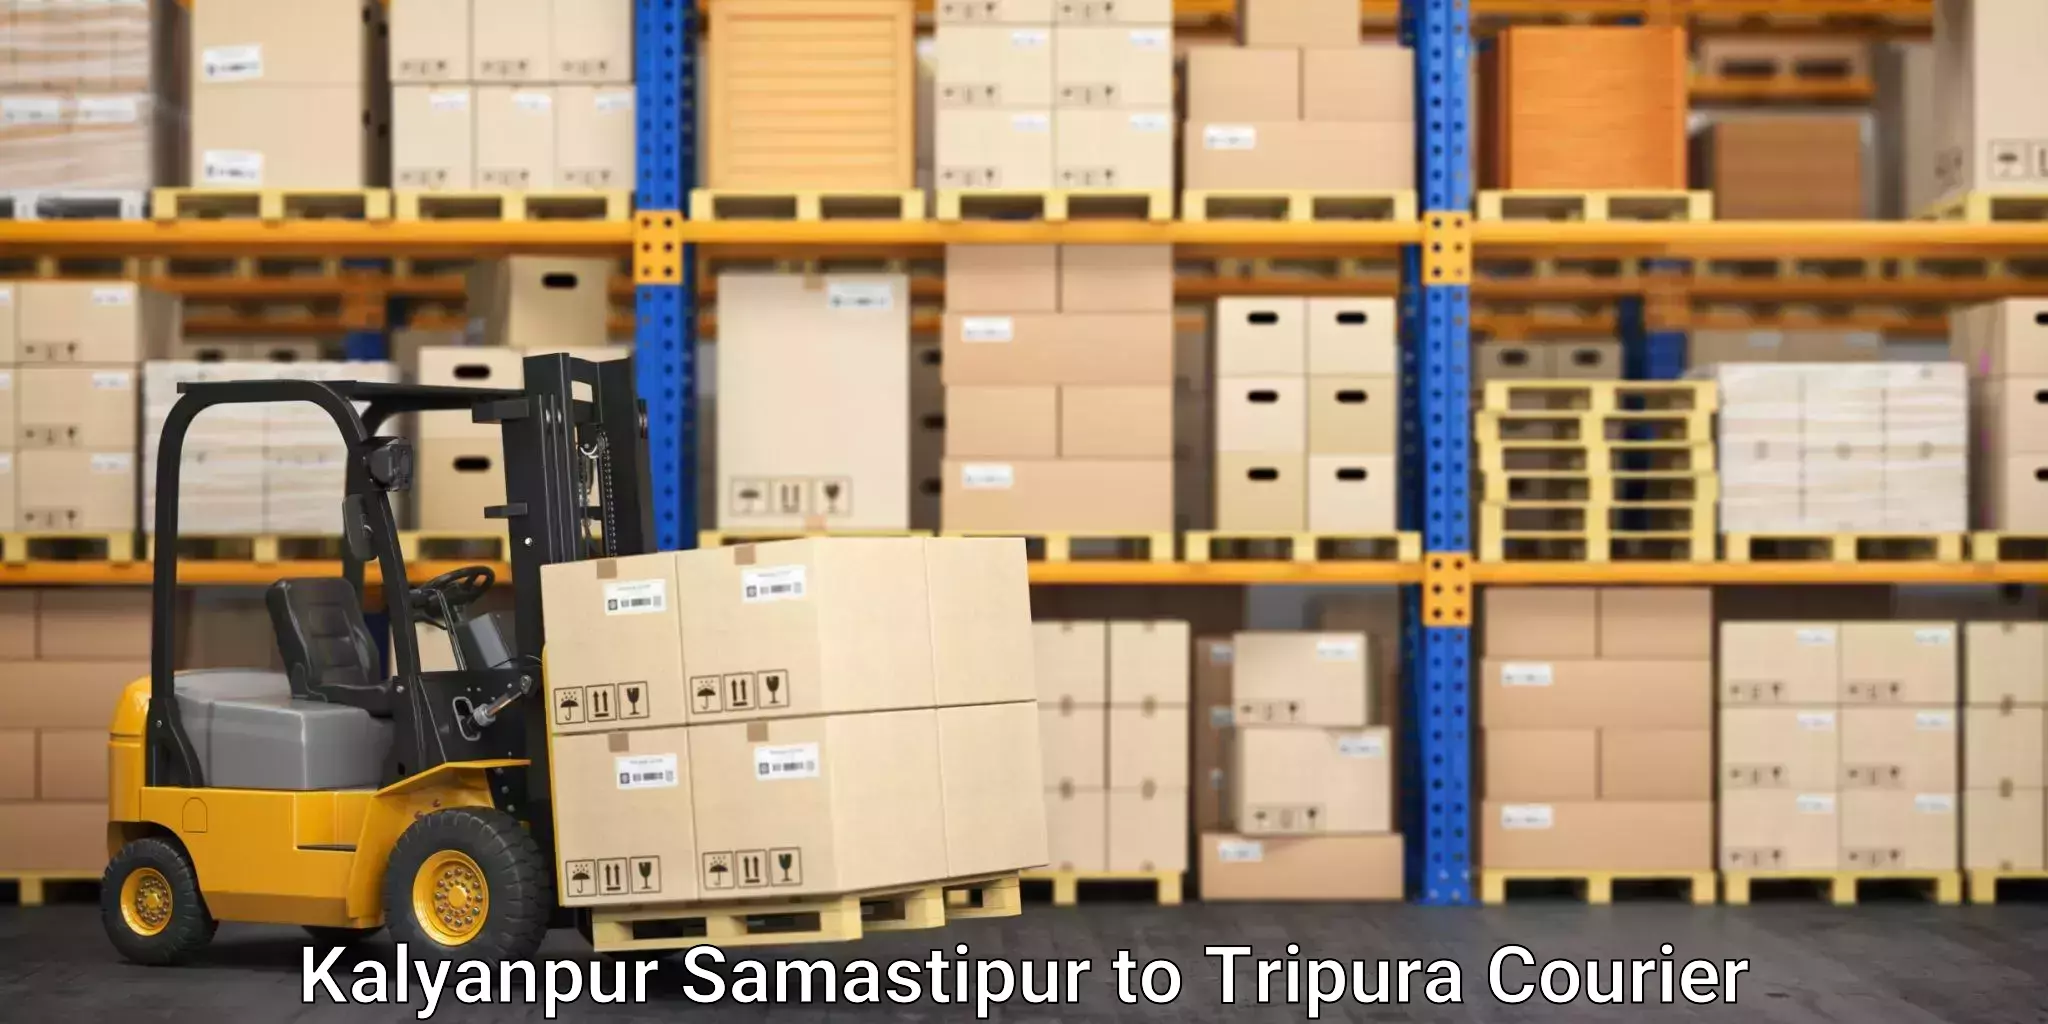 Trusted moving company Kalyanpur Samastipur to Udaipur Tripura